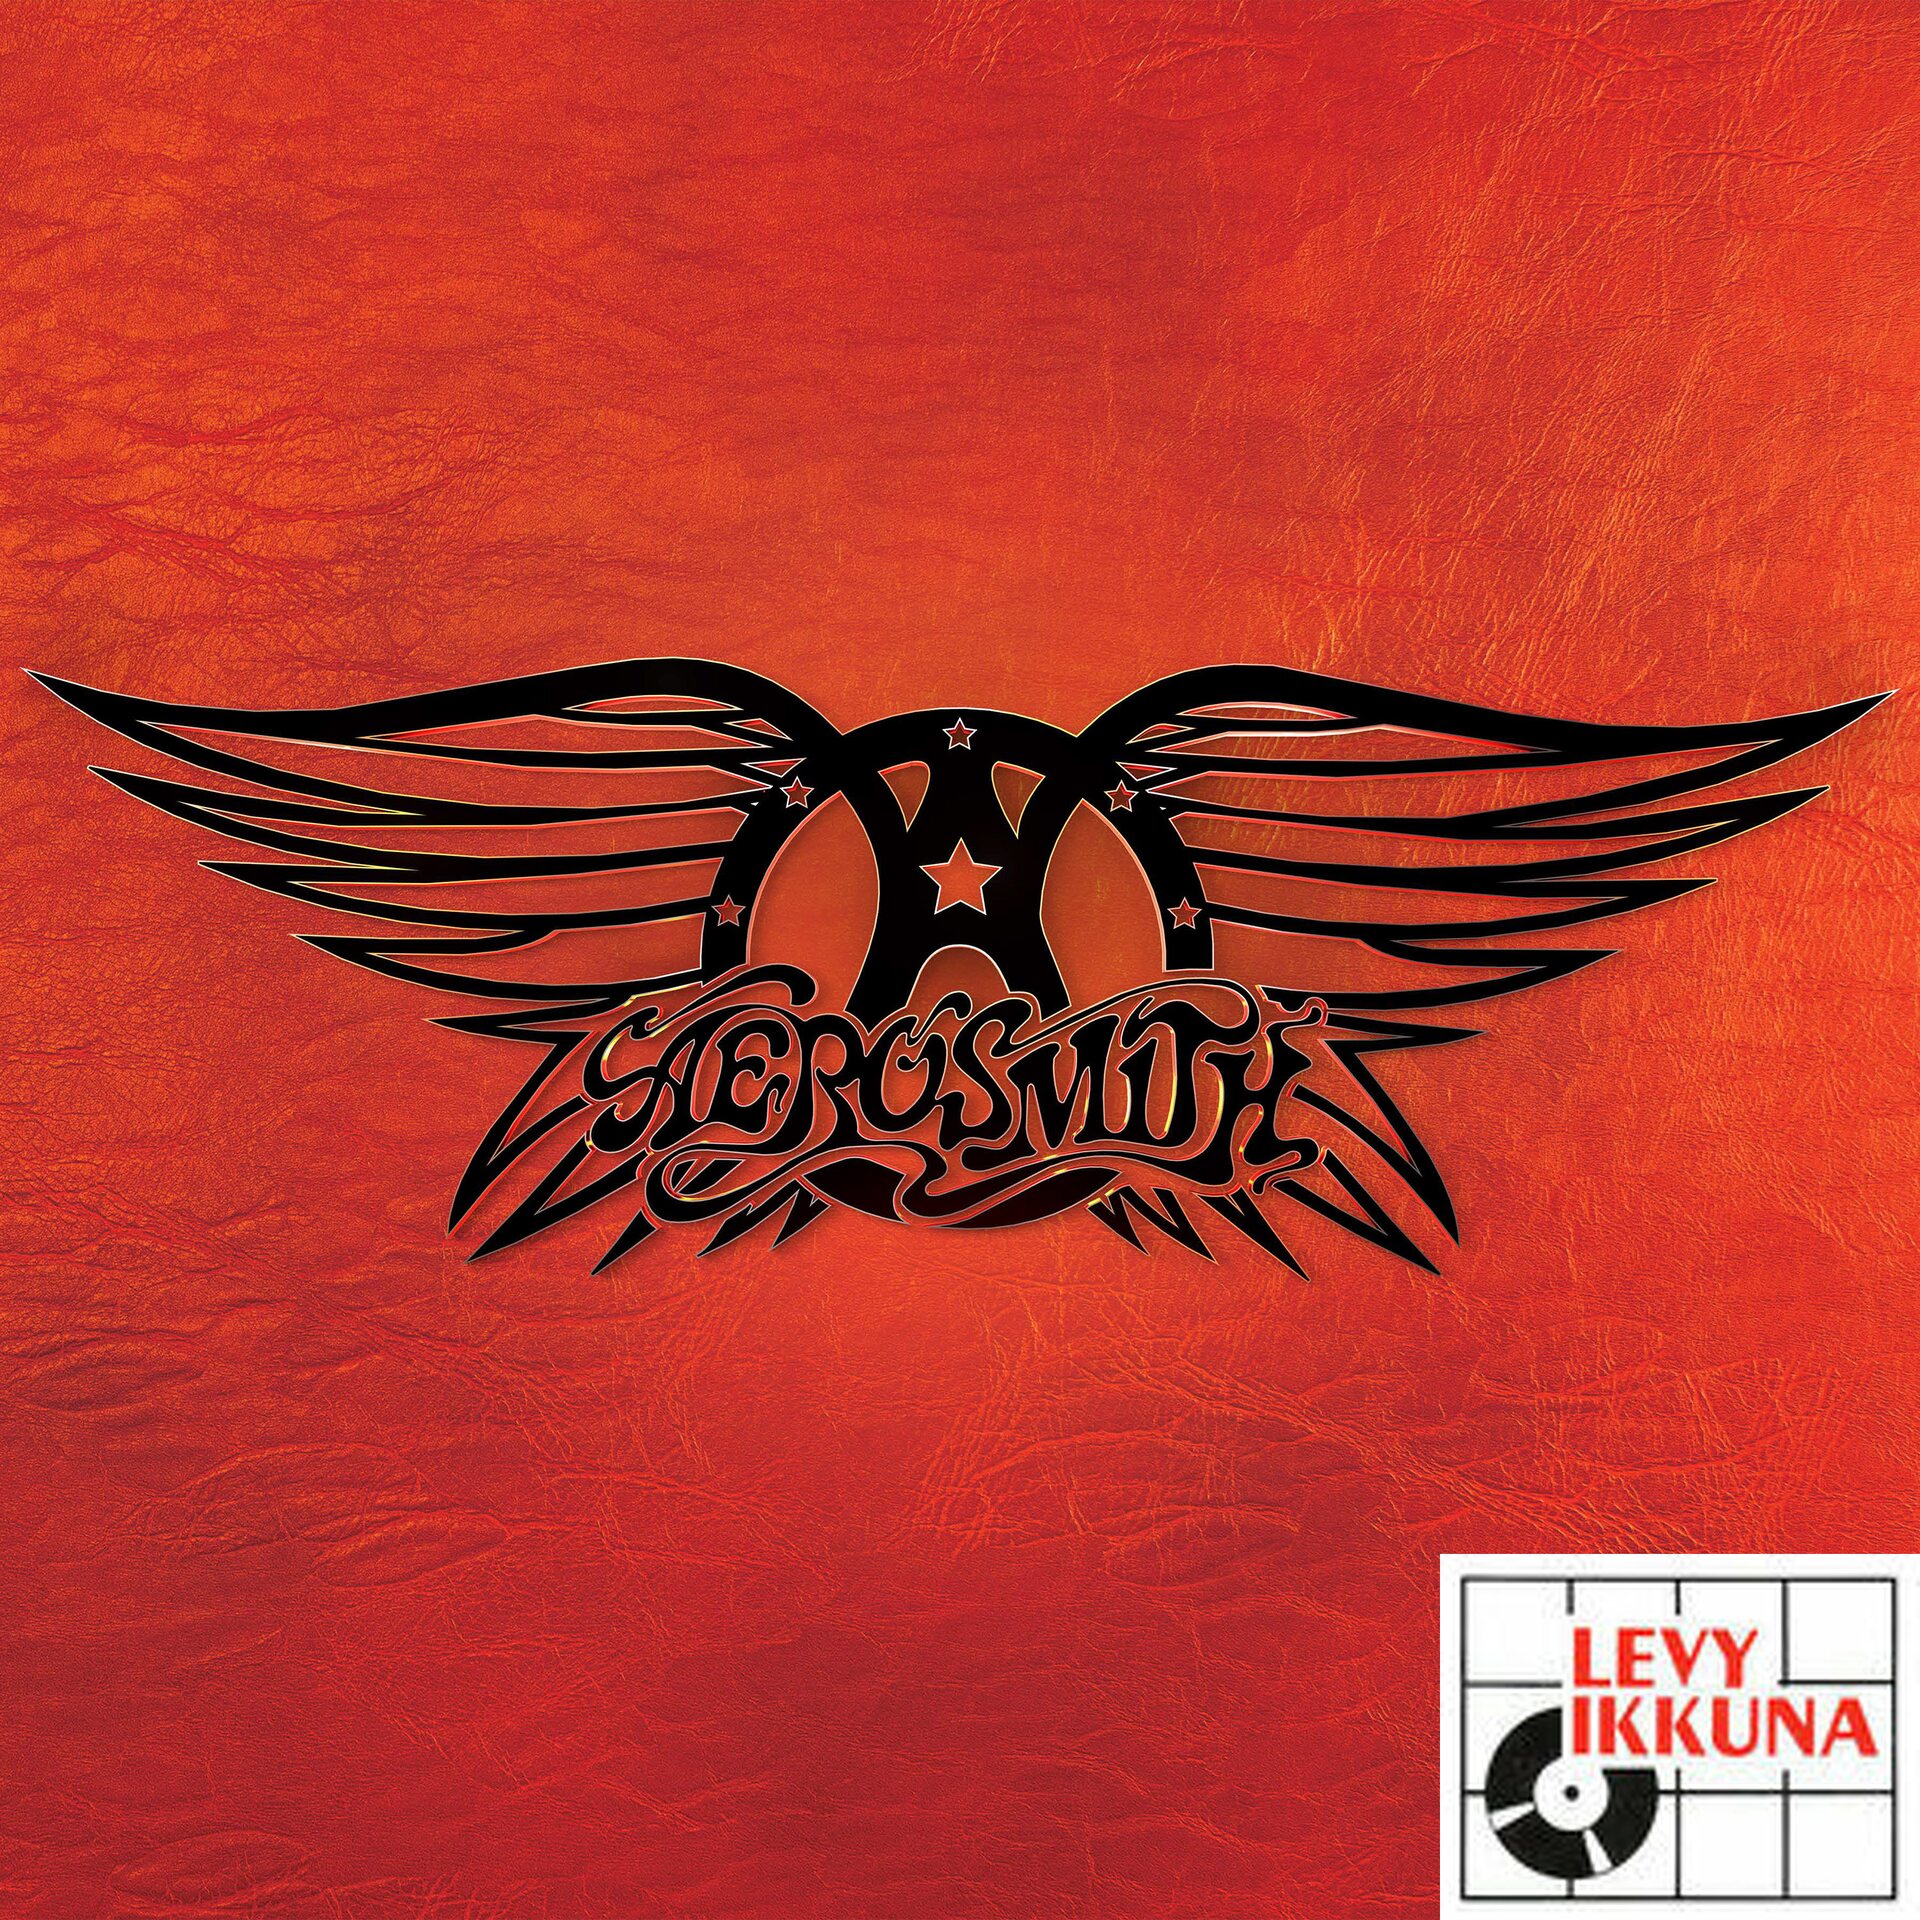 Aerosmith Greatest Hits 3CD Expanded Edition HEAVY/METAL/HARD ROCK